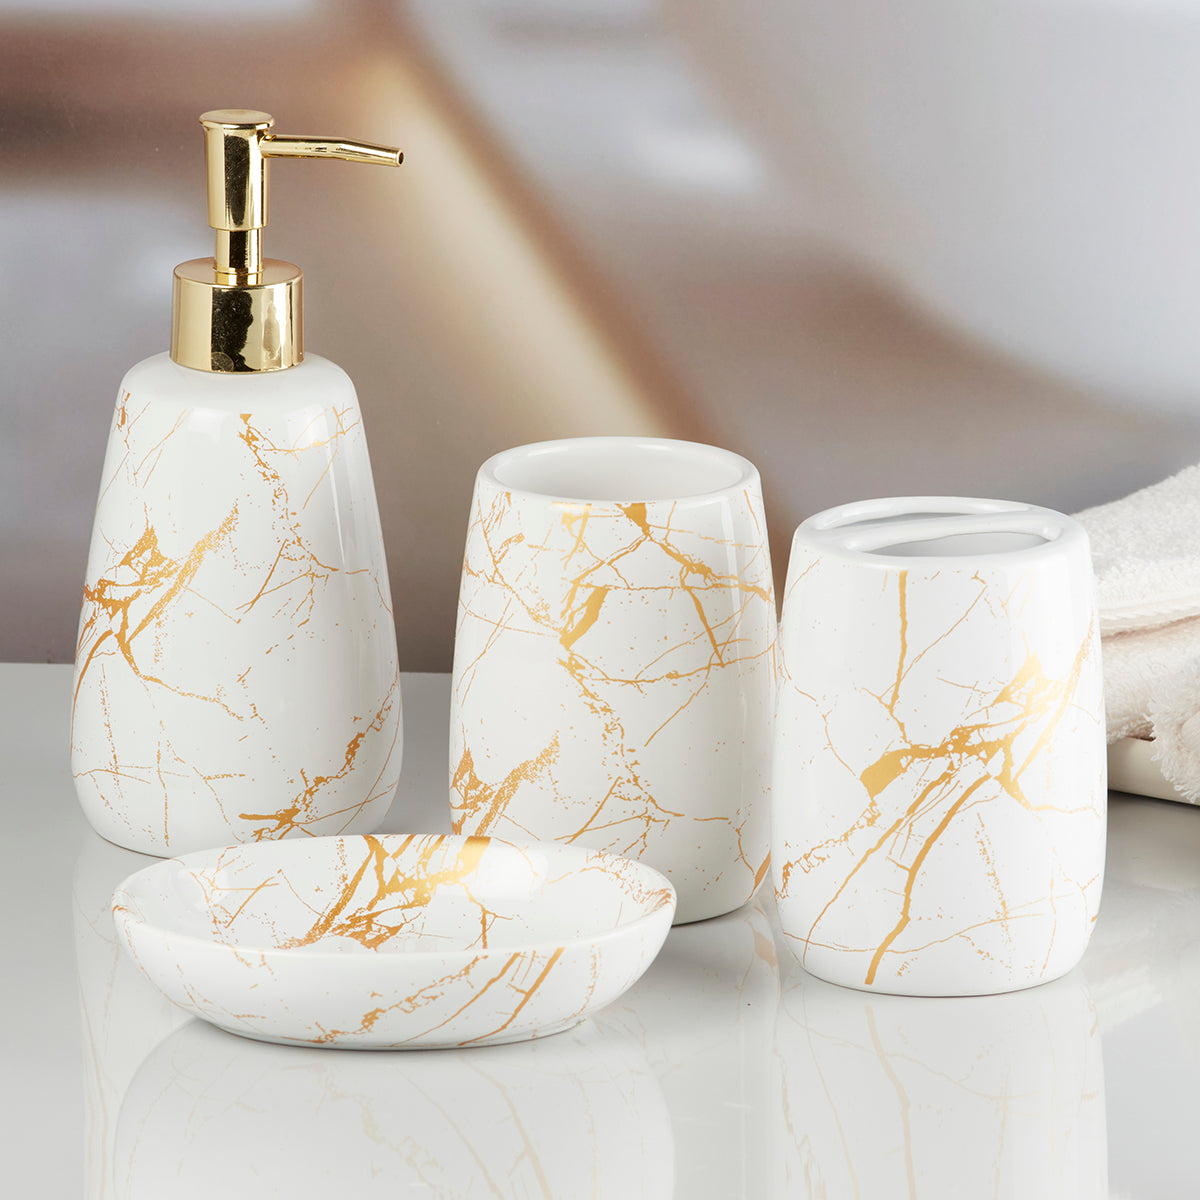 Ceramic Bathroom Accessories Set of 4 Bath Set with Soap Dispenser (8063)